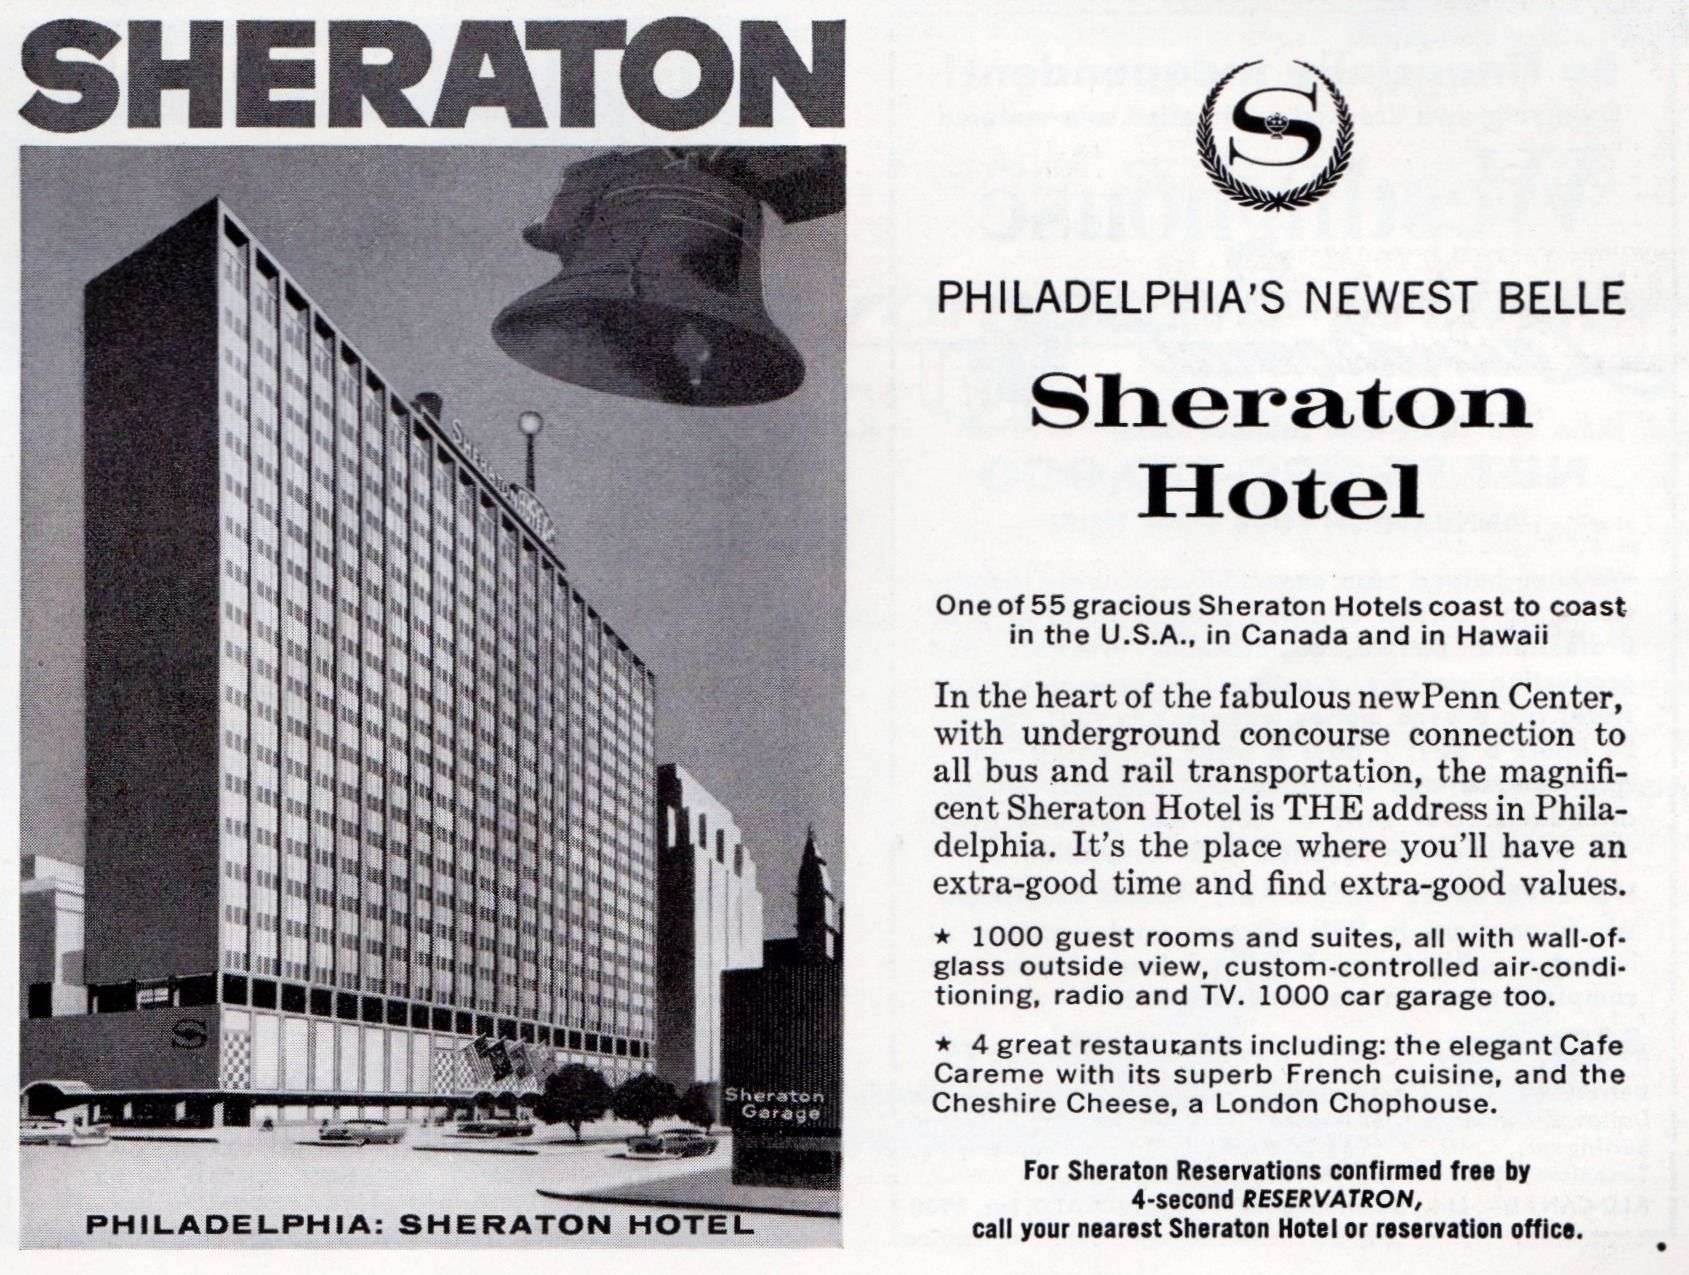 The advertisement of Sheraton Hotel in Philadelphia.